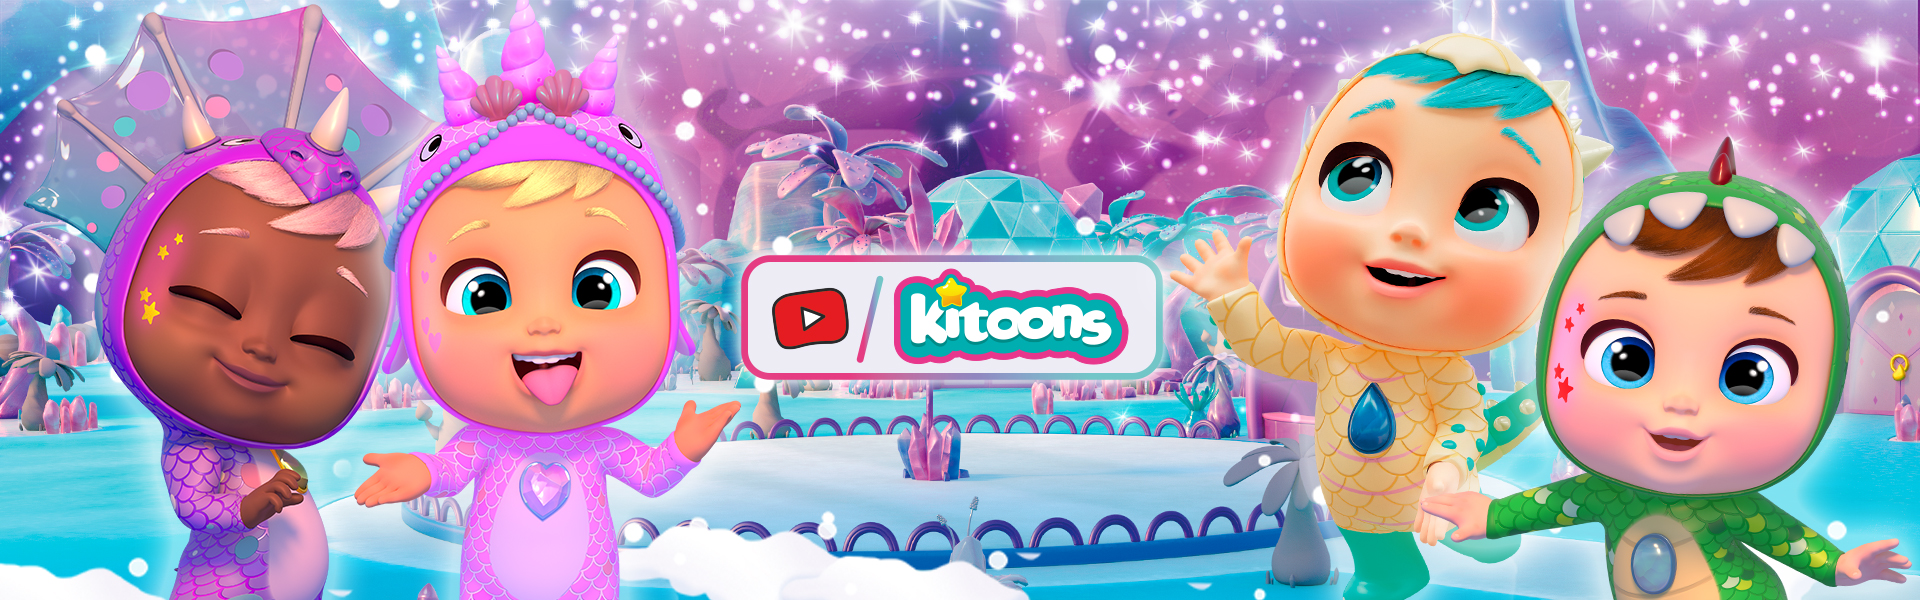 Bebés Llorones Lágrimas Mágicas Icy World Dinos + Frozen Frutti - Kitoons